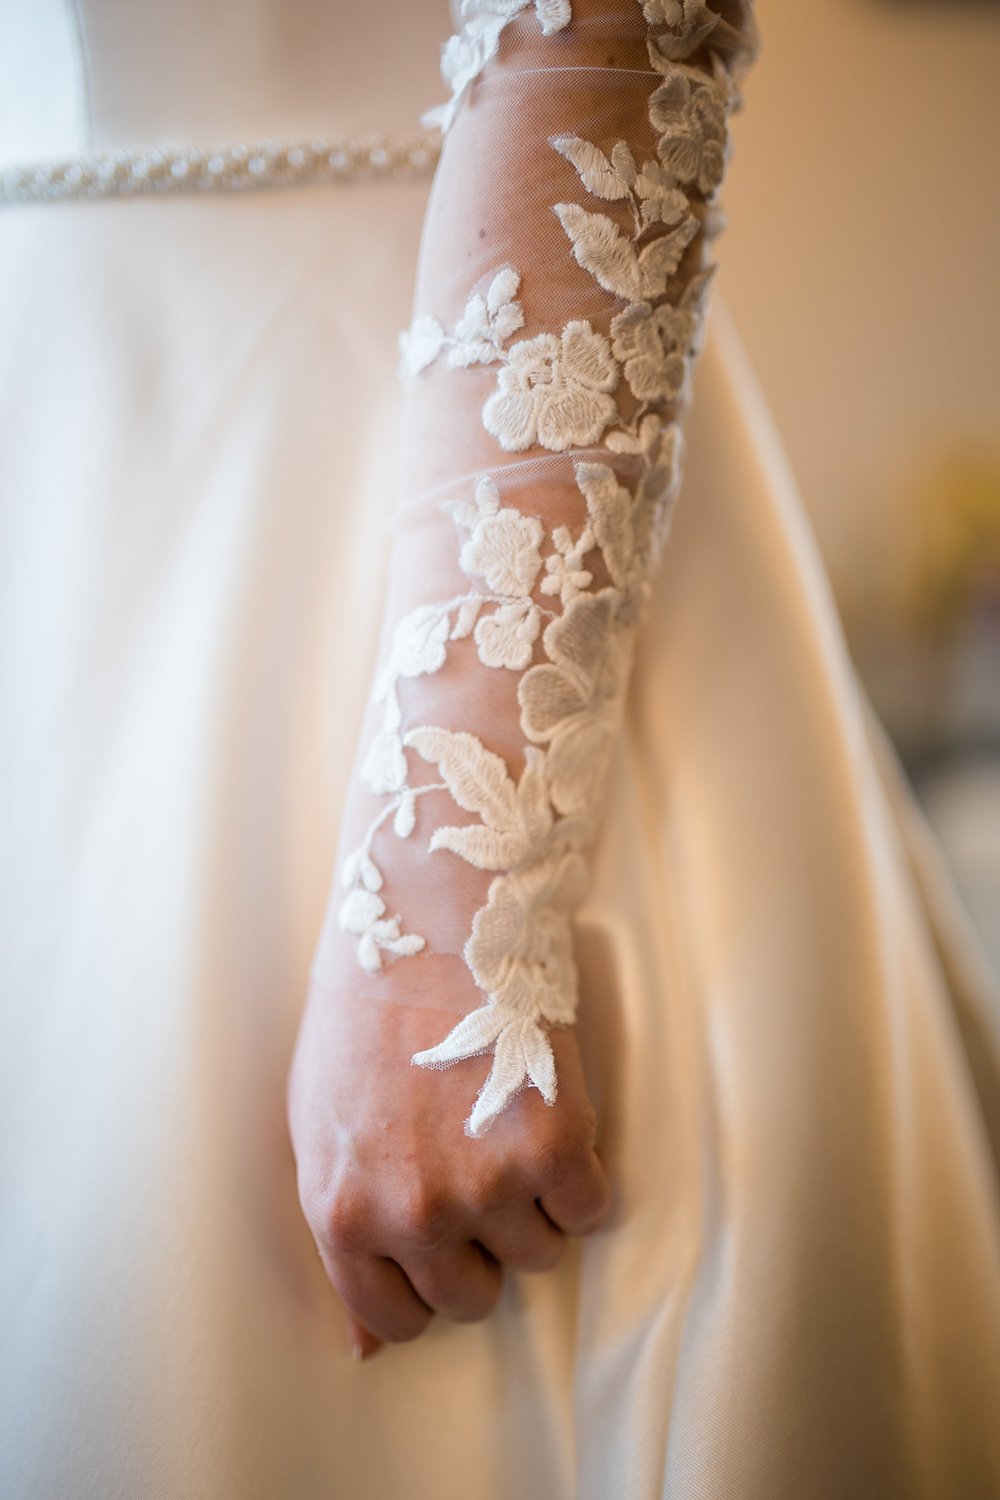 Lace sleeve on a wedding dress